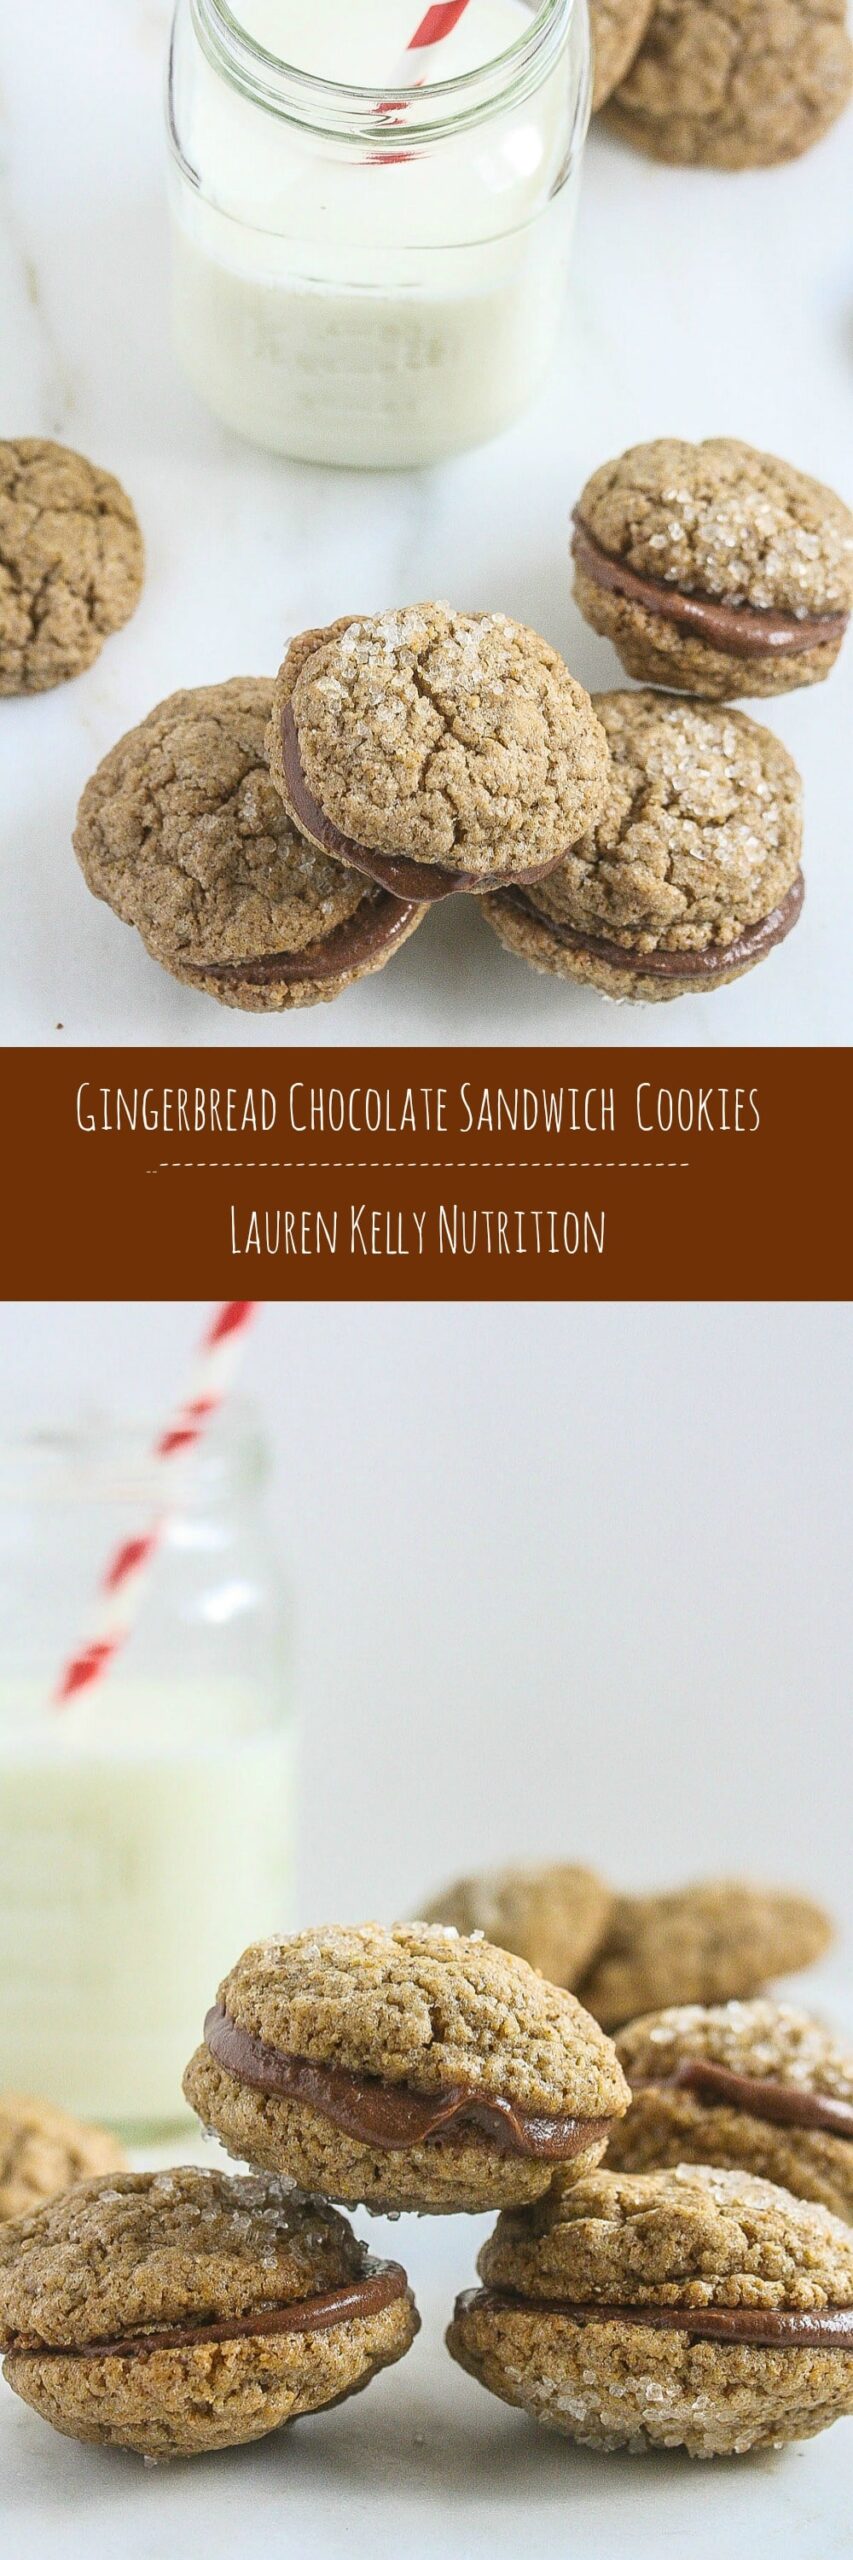 Healthier Gingerbread Chocolate Sandwich Cookies from Lauren Kelly Nutrition 